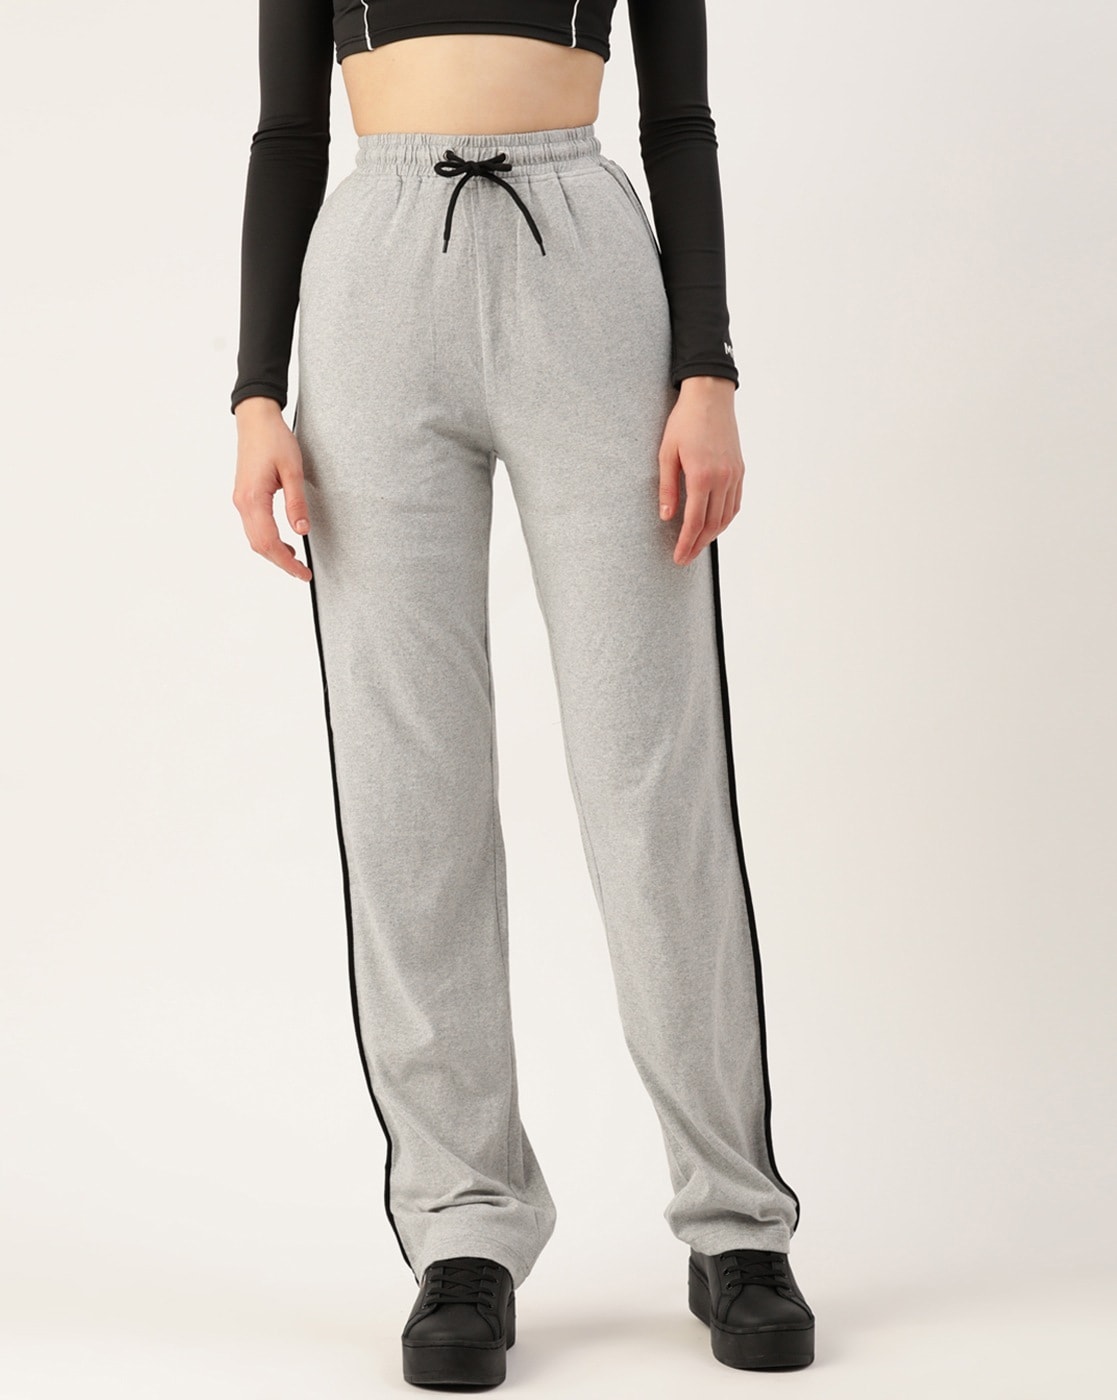 Buy Grey Track Pants for Women by AERO JEANS WOMENS Online  Ajiocom